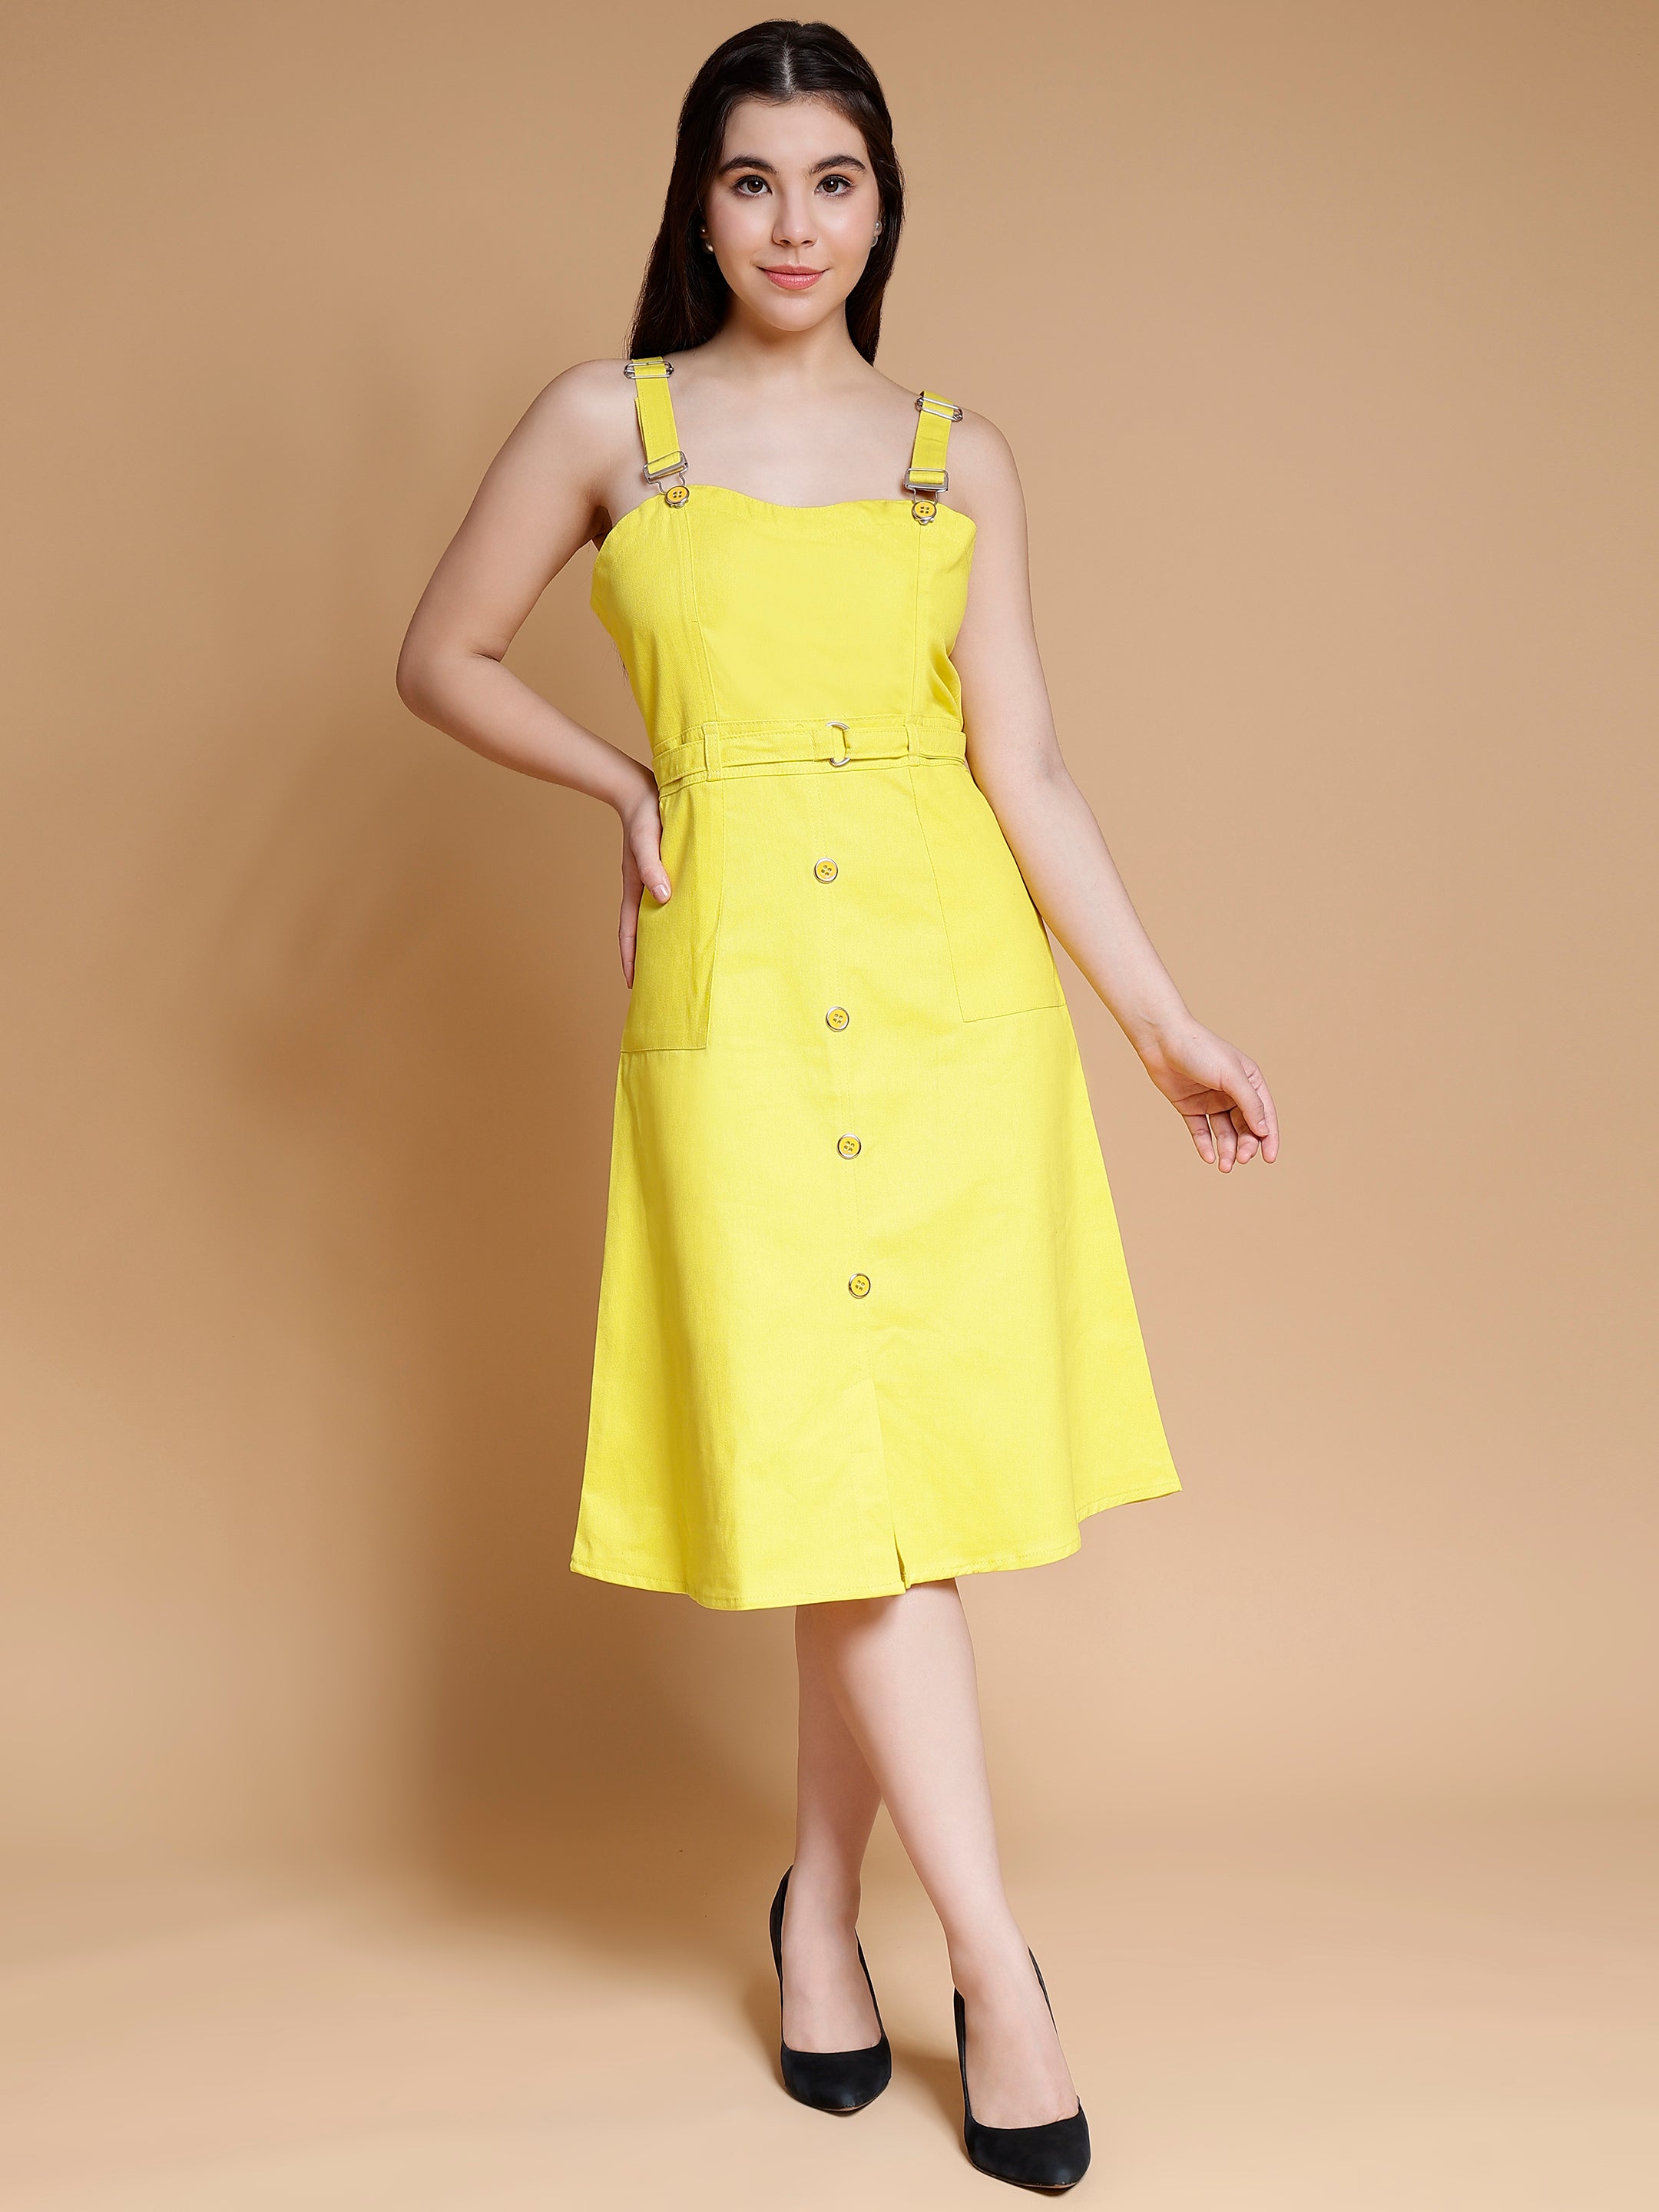 Glamoda A-Line Yellow Dress